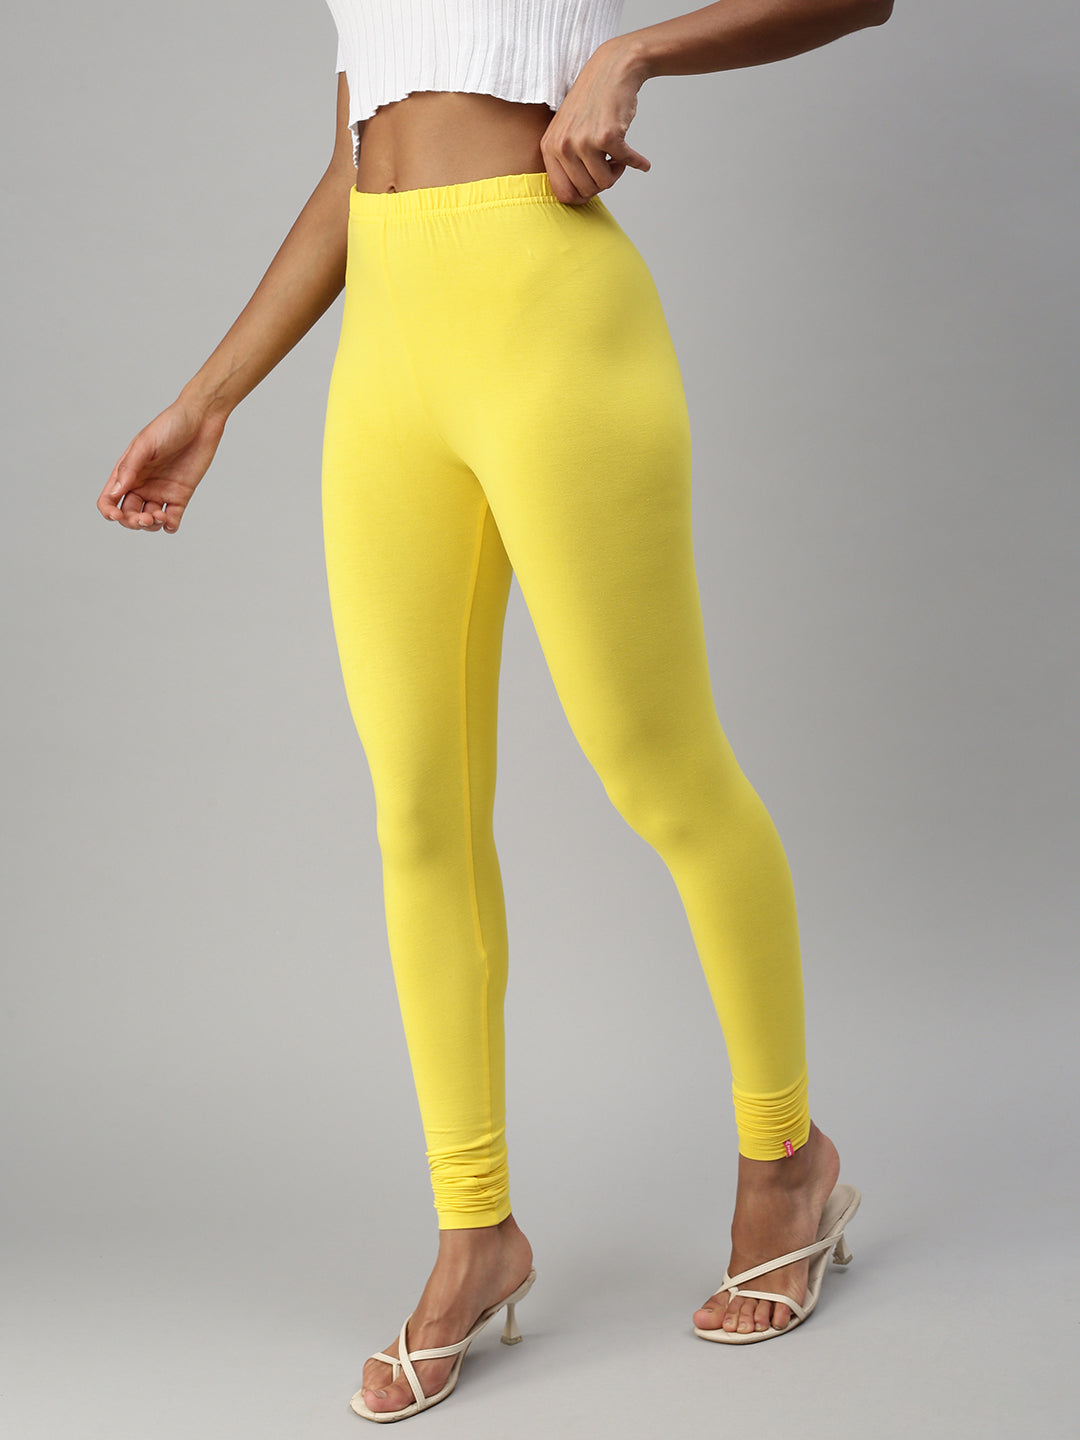 Hanas Tops Women's Leggings Sexy Matching Solid Color Slim Midriff Top  Yellow/M - Walmart.com